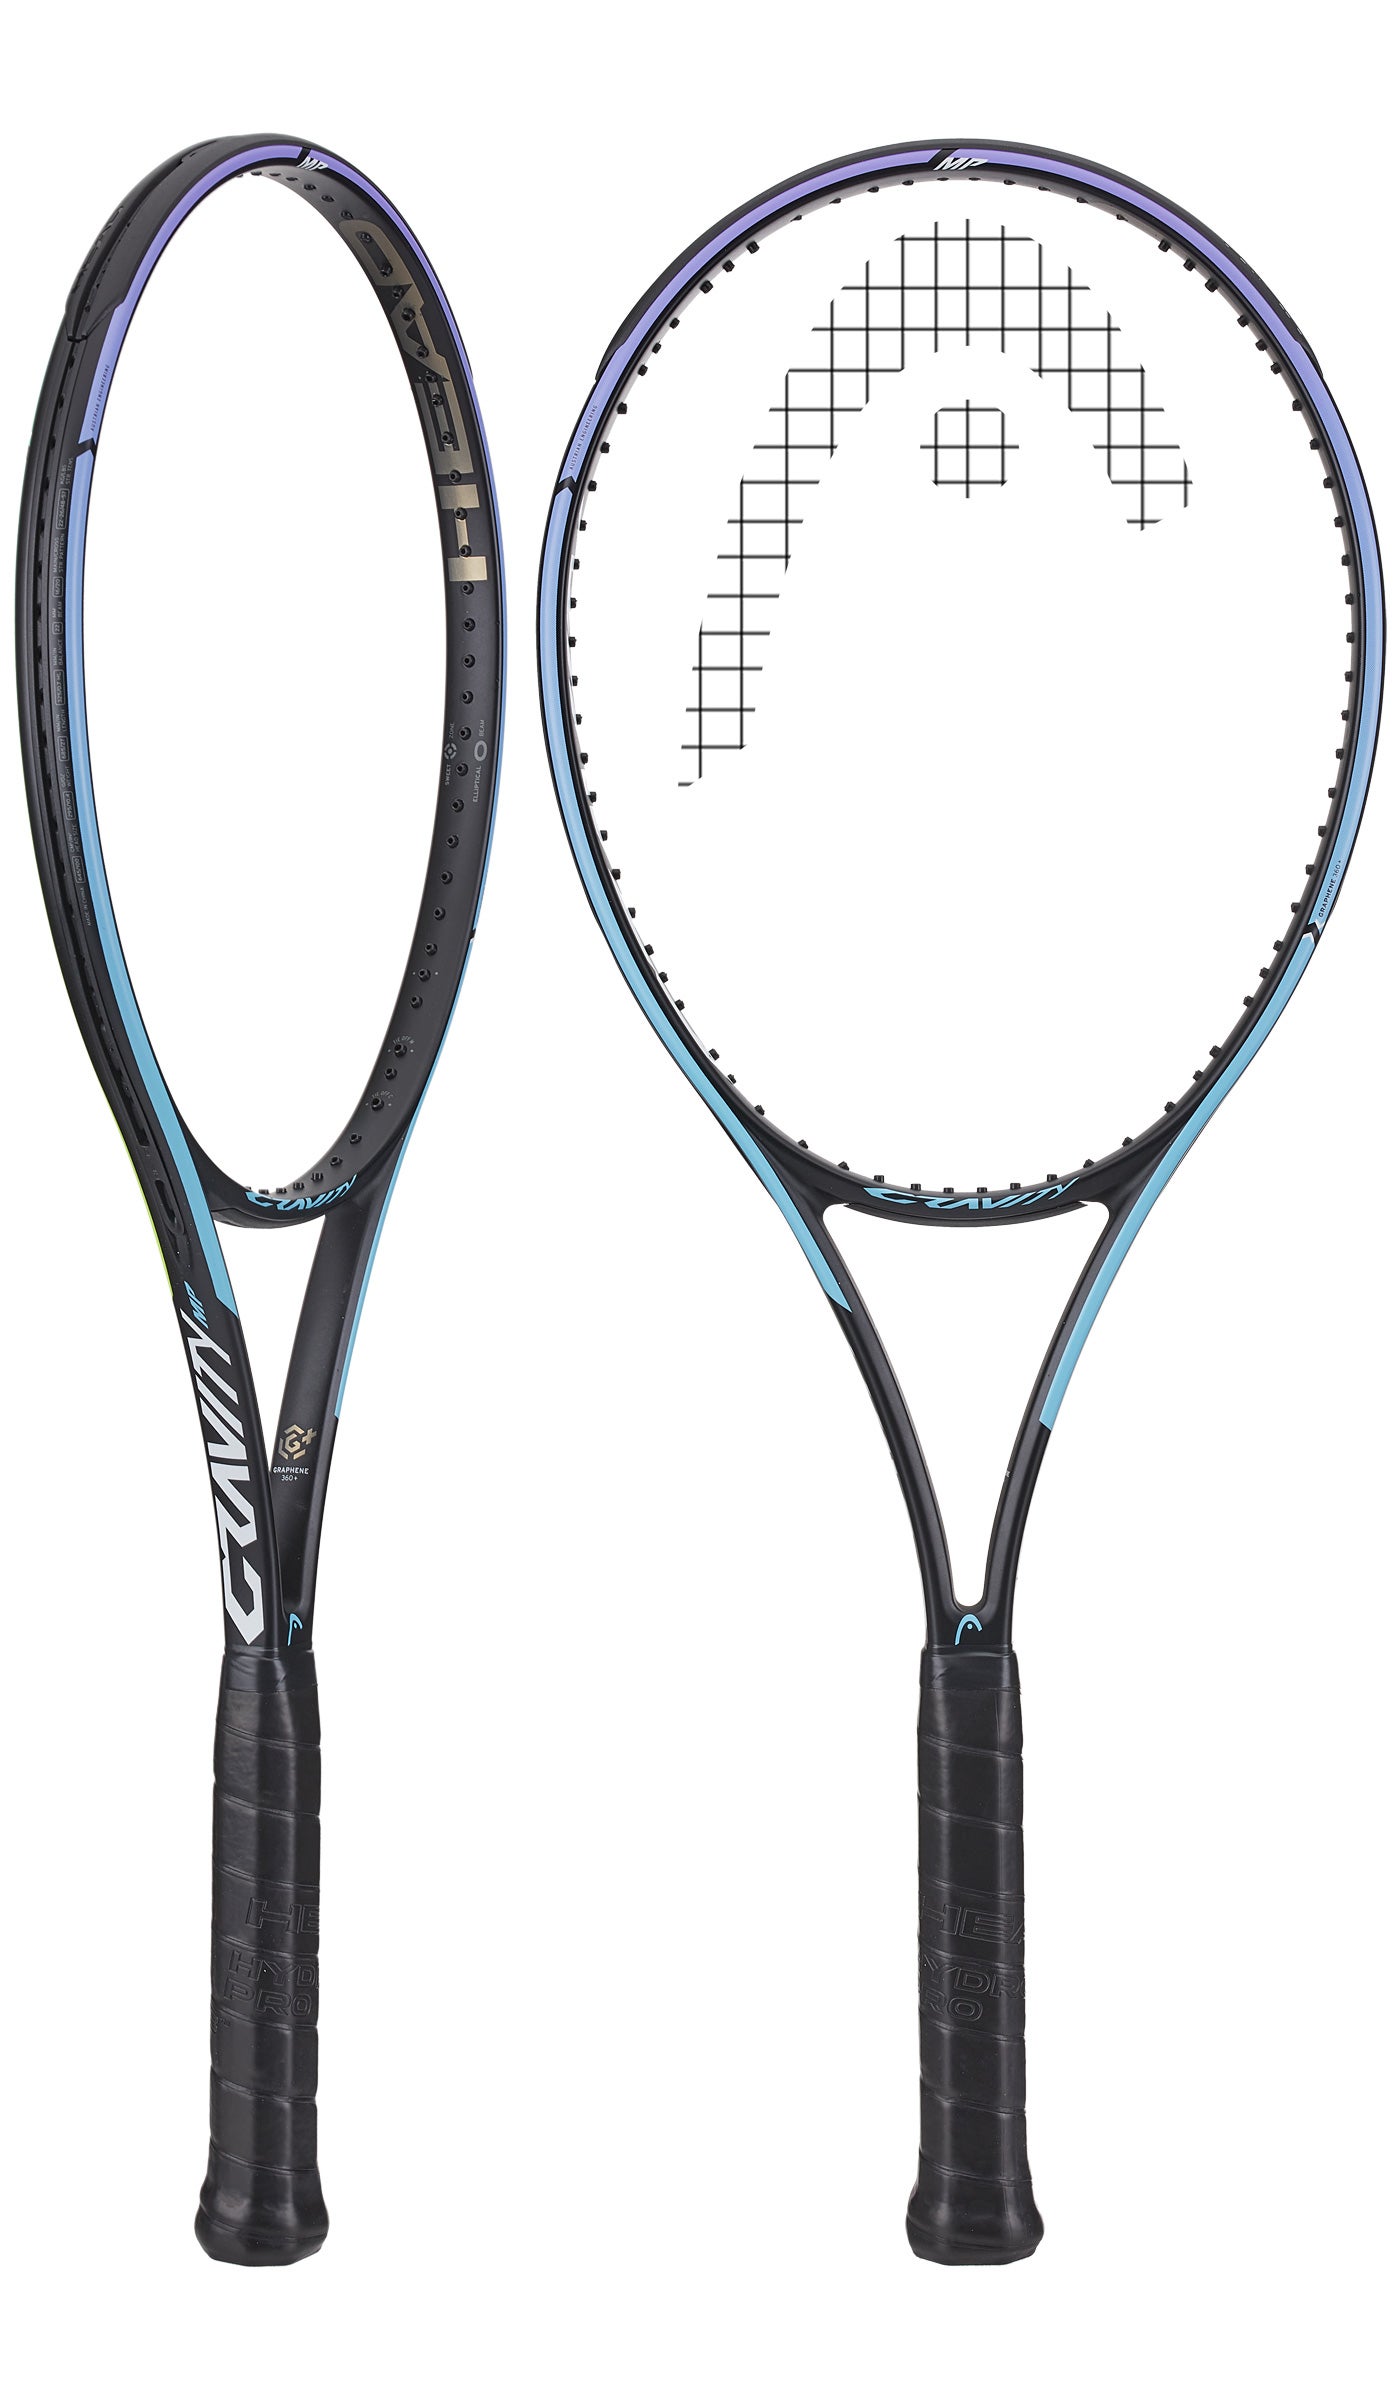 FREE SHIPPING 2 Packs of HEAD Gravity Hybrid Tennis racquet racket string set 